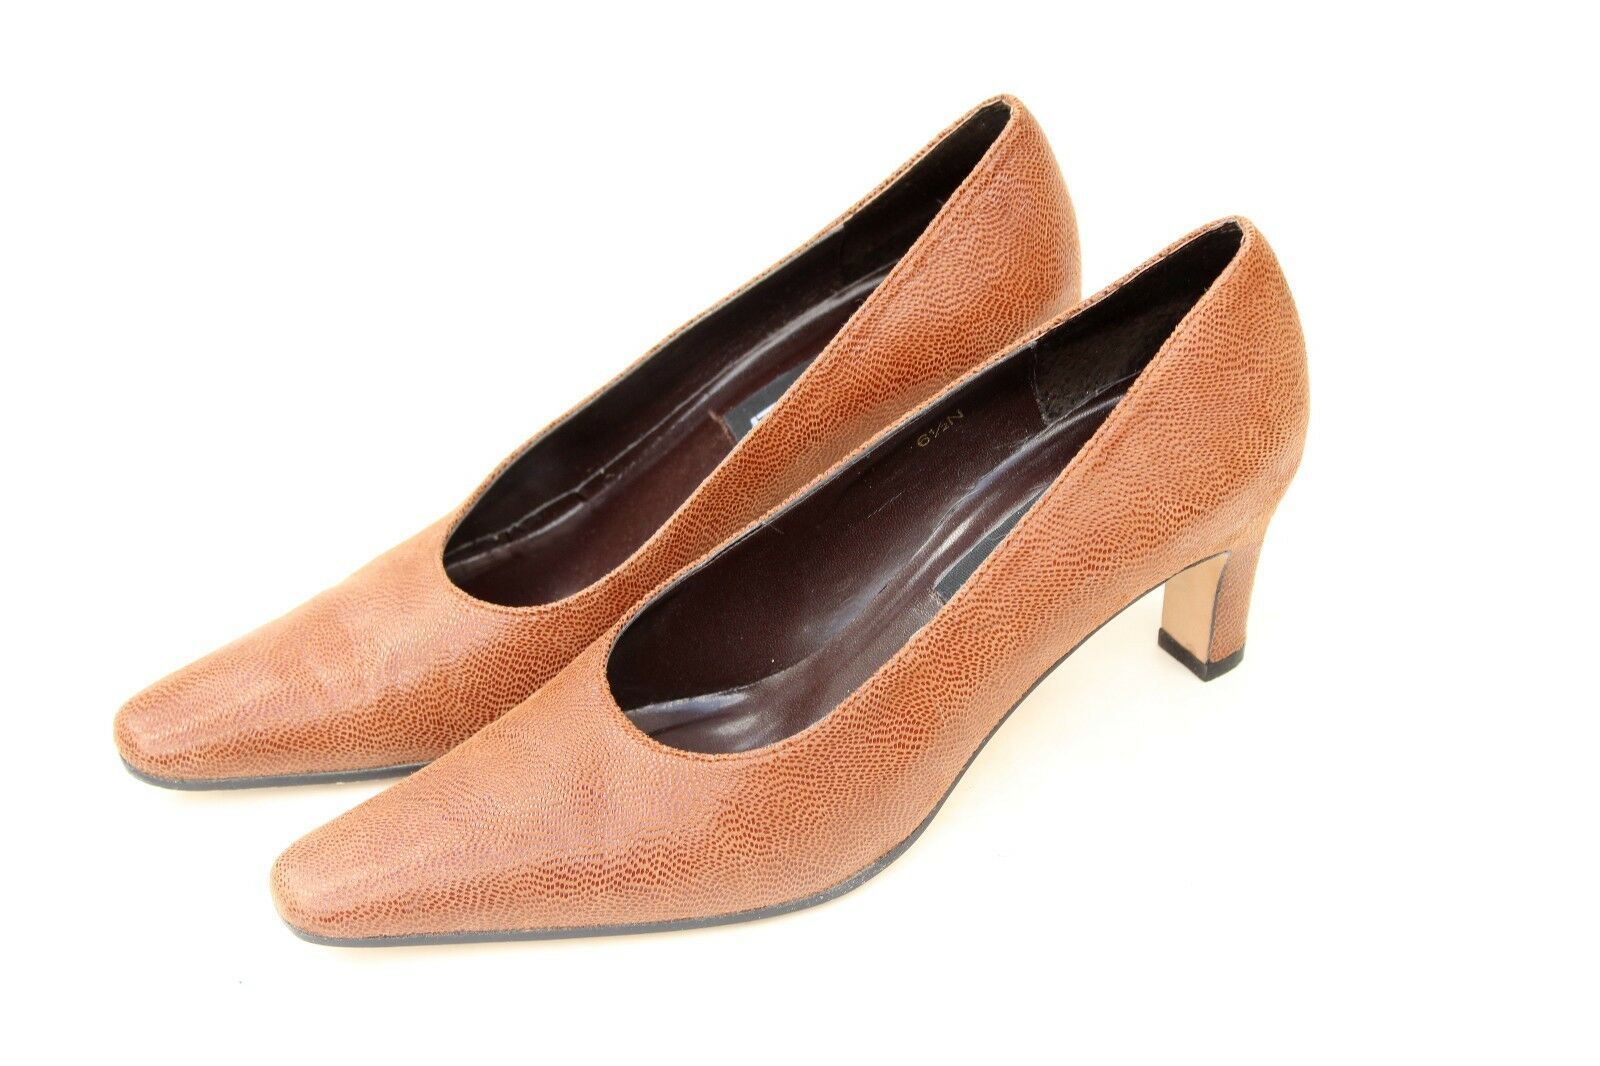 Primary image for VANELI Locket Womens Brown Textured Leather High Heel Pump Shoes 2 .5" Heel 6.5N